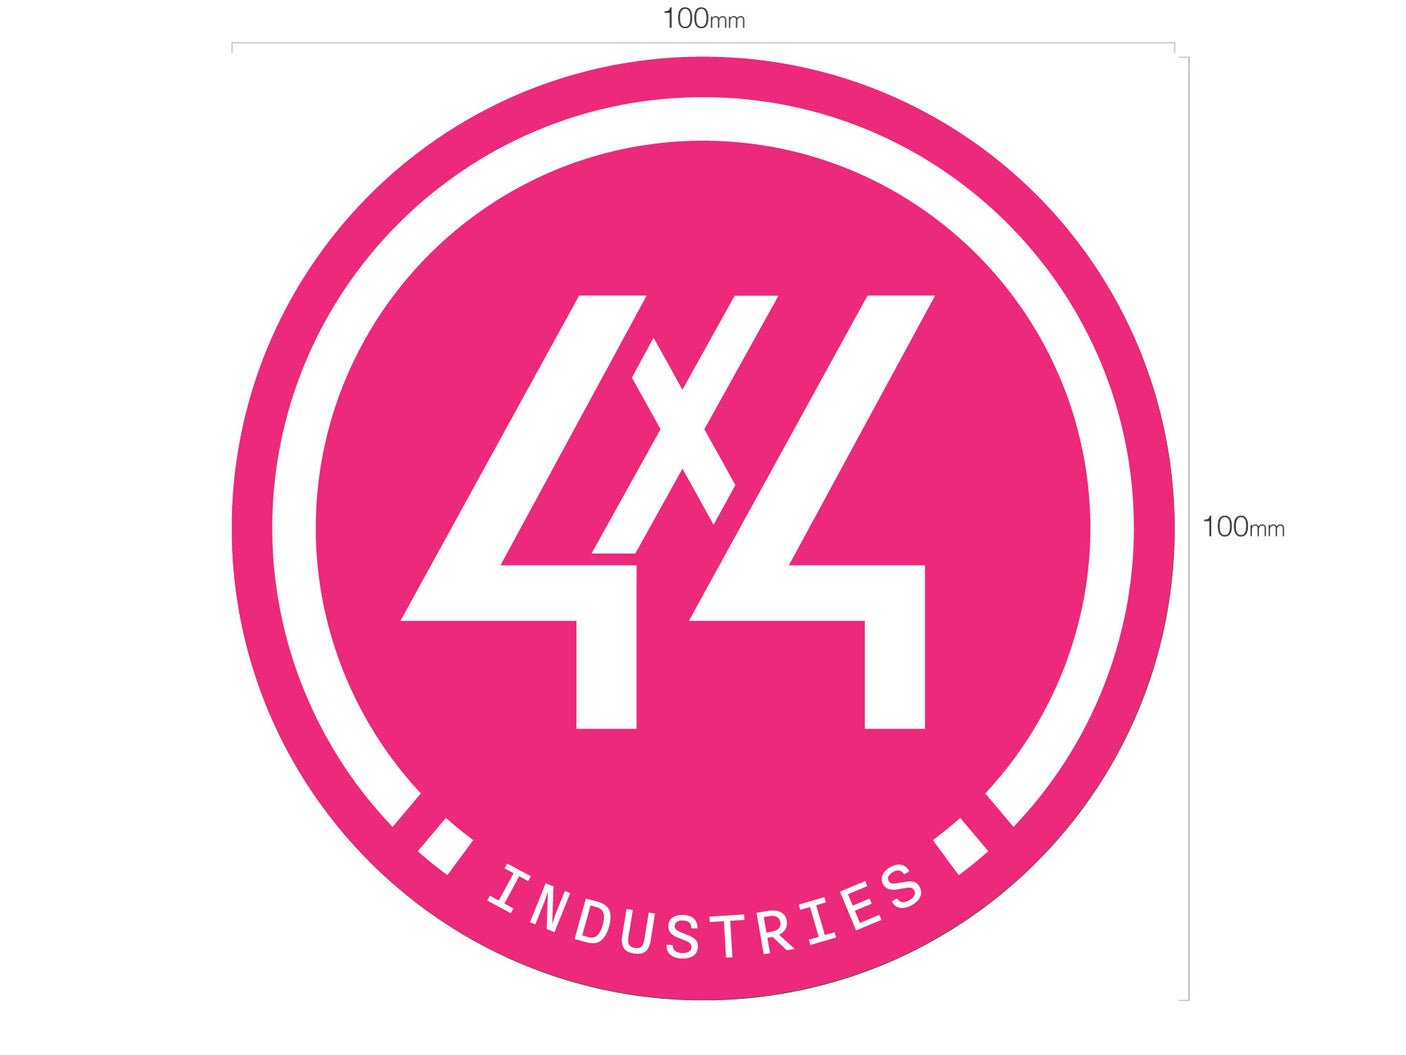 4x4 Industries Slap Sticker